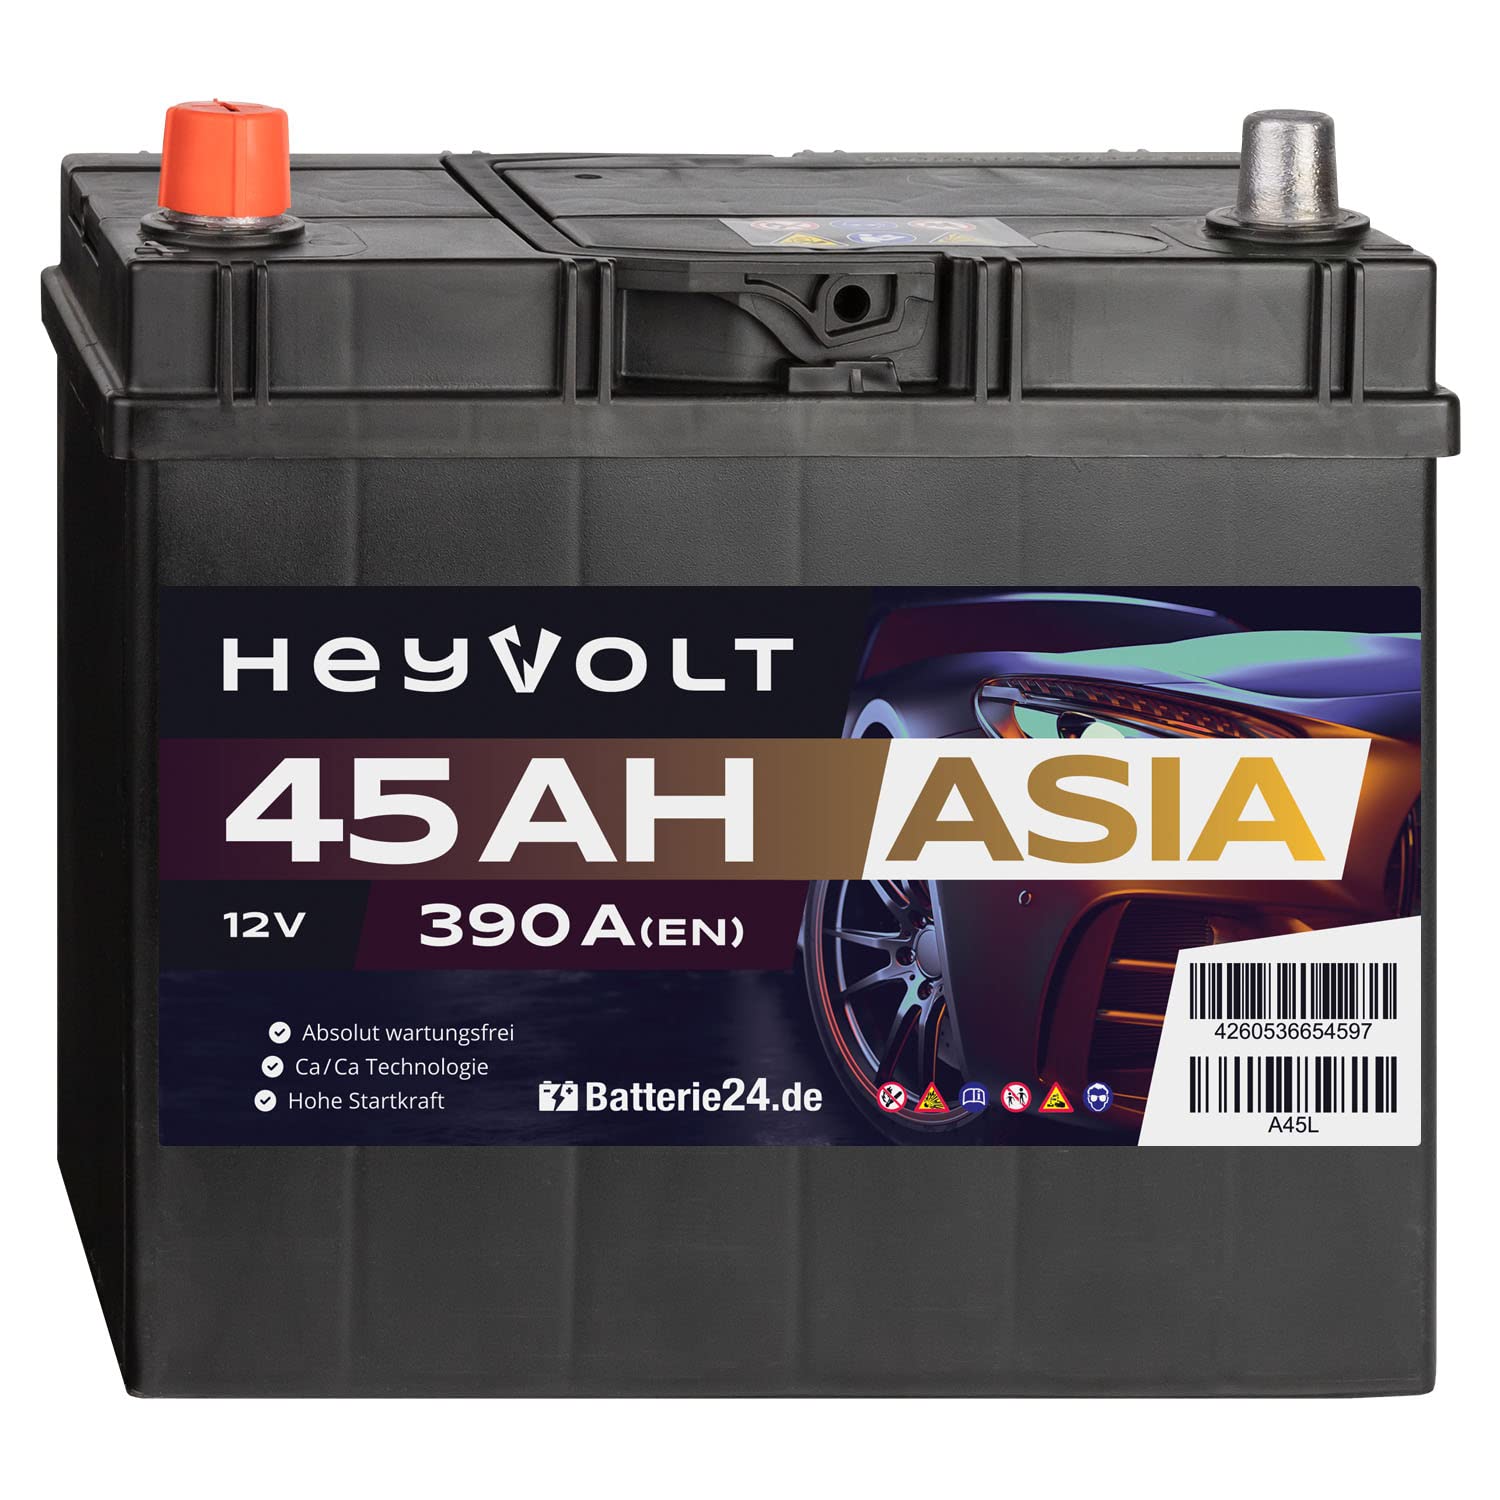 HeyVolt Asia Autobatterie 12V 45Ah 390A/EN Starterbatterie, absolut wartungsfrei, Pluspol Links von Batterie24.de